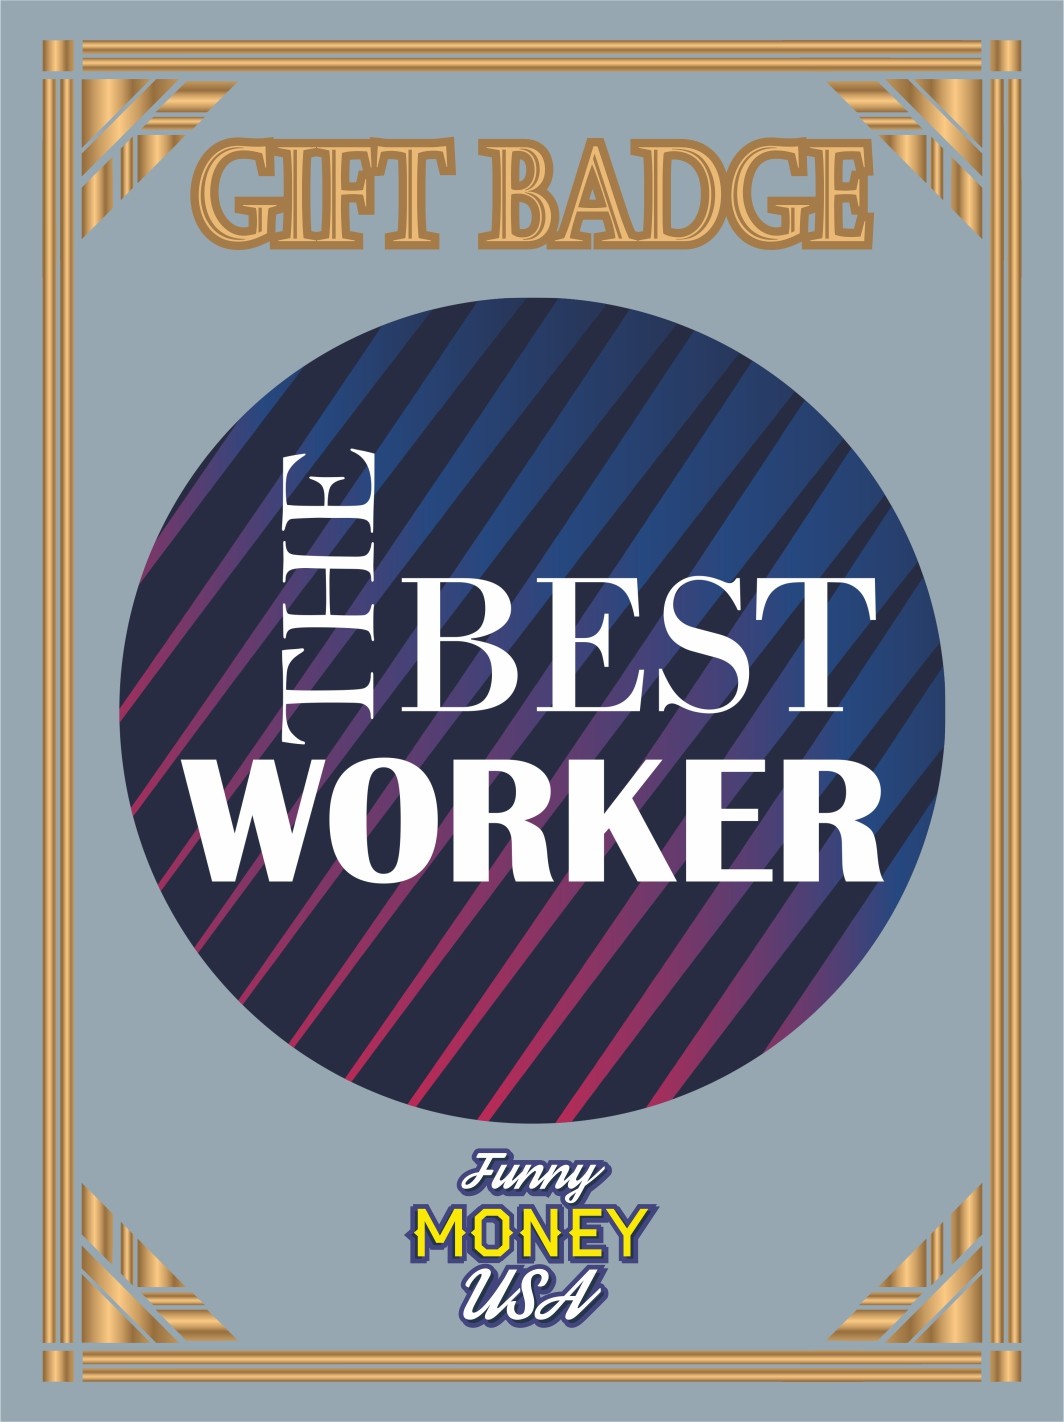 Gift badges "Best Worker"